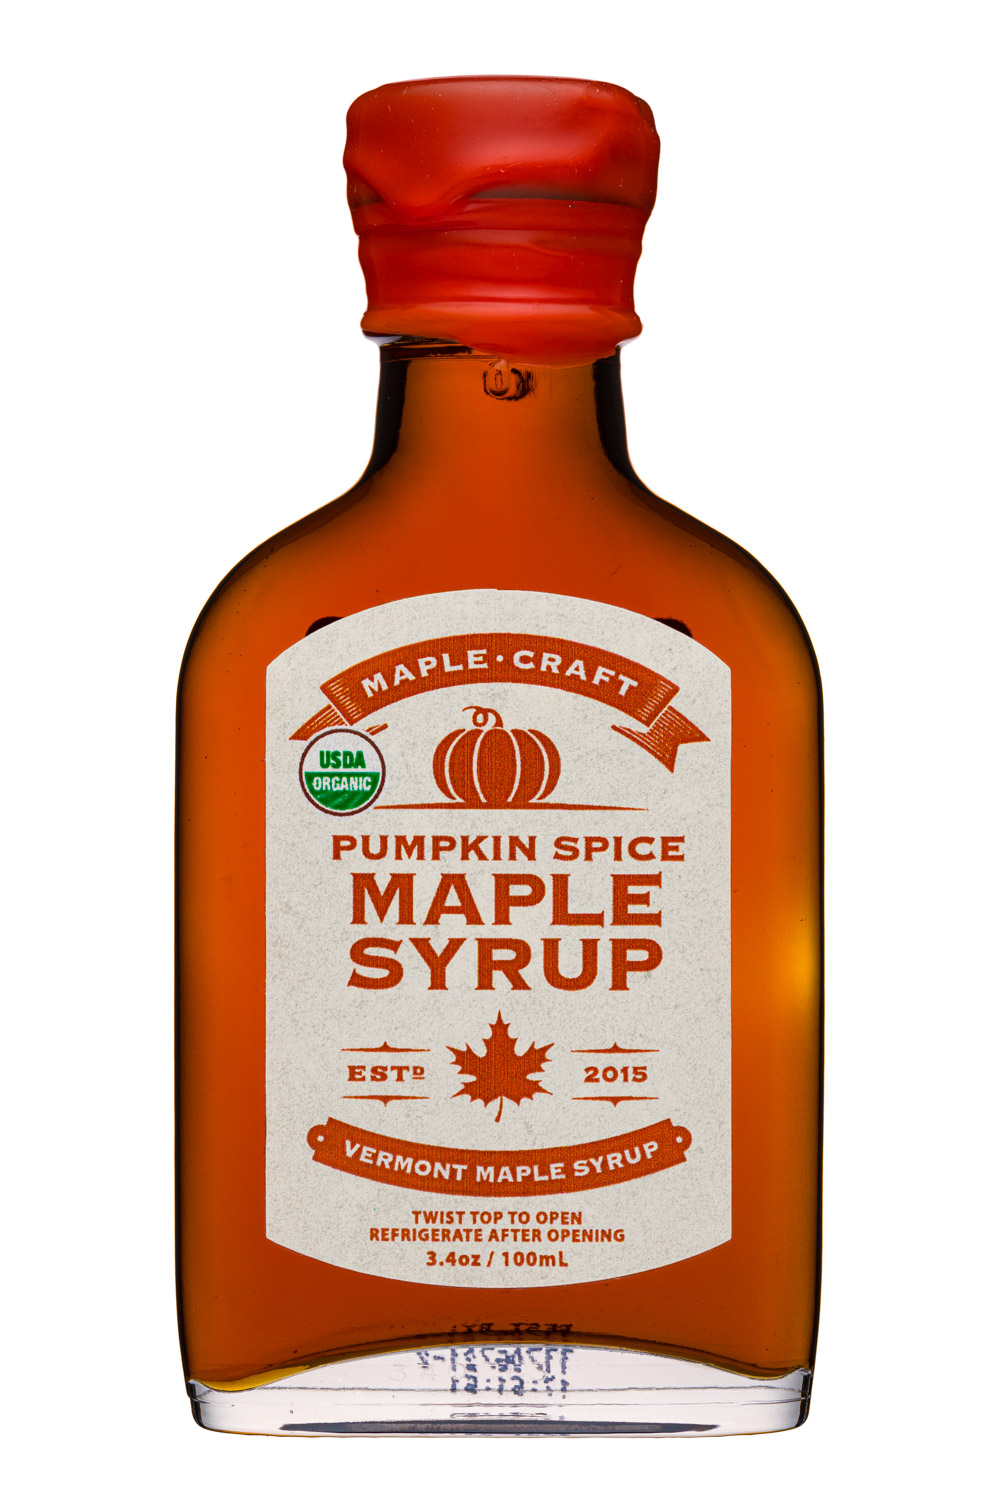 Pumpkin Spice Maple Syrup